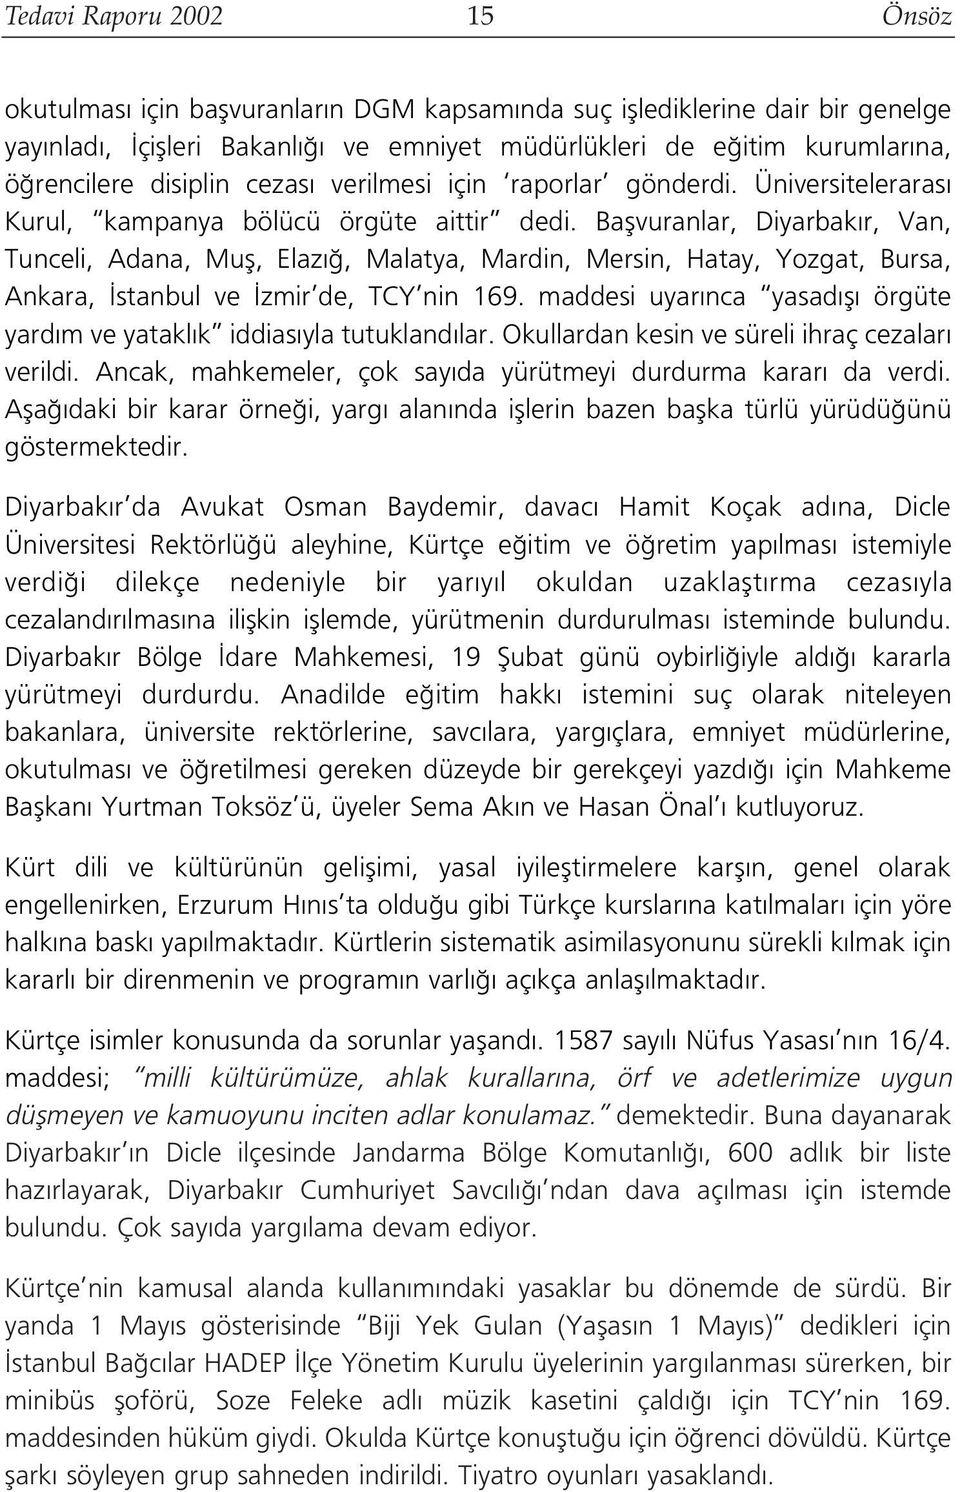 Baflvuranlar, Diyarbak r, Van, Tunceli, Adana, Mufl, Elaz, Malatya, Mardin, Mersin, Hatay, Yozgat, Bursa, Ankara, stanbul ve zmir de, TCY nin 169.